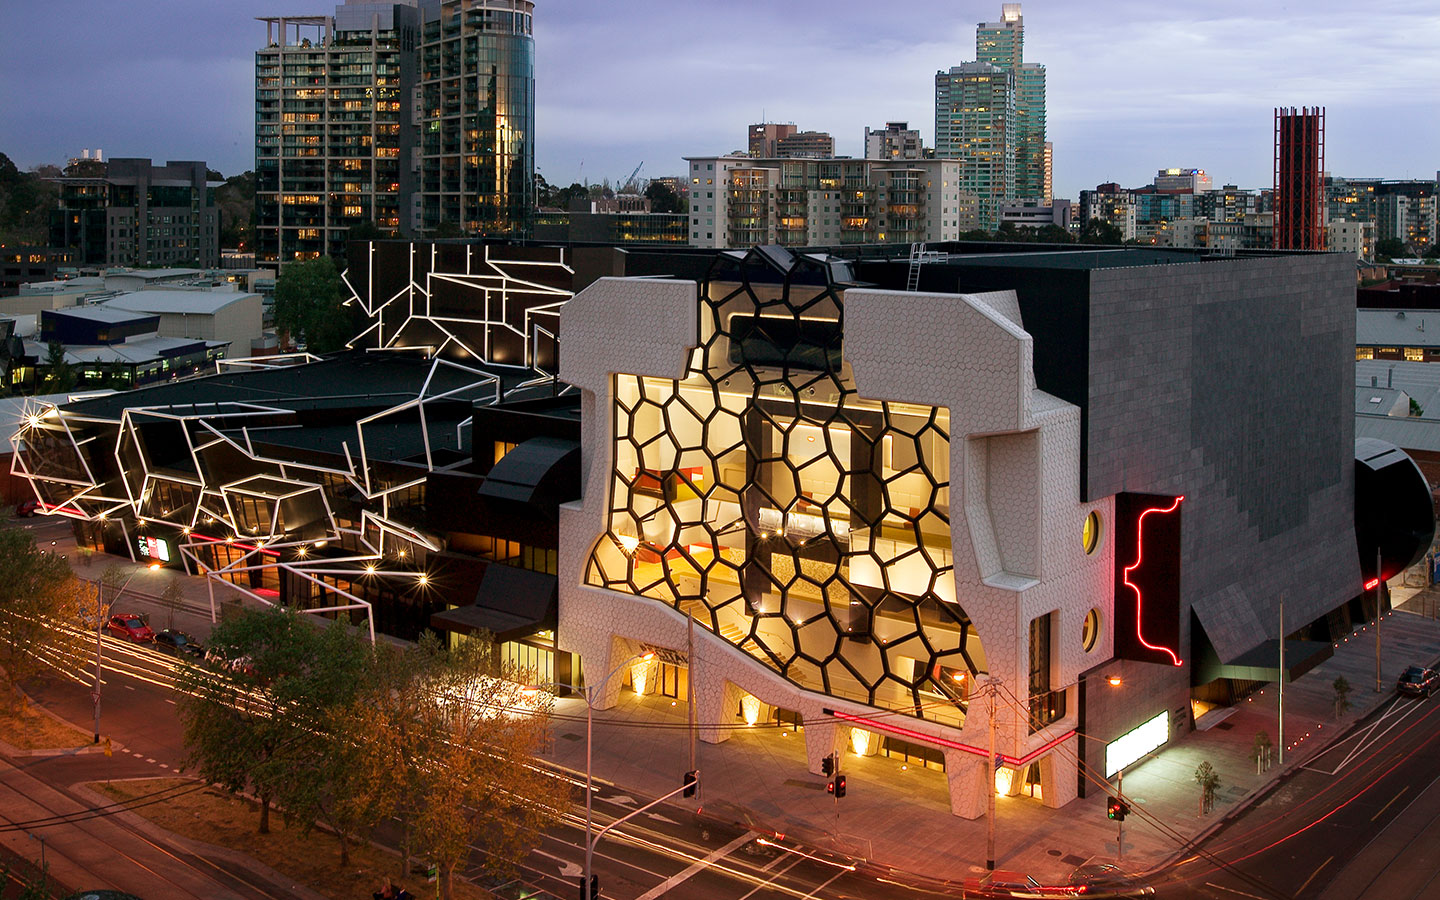 The Melbourne Recital Centre in a landscape image